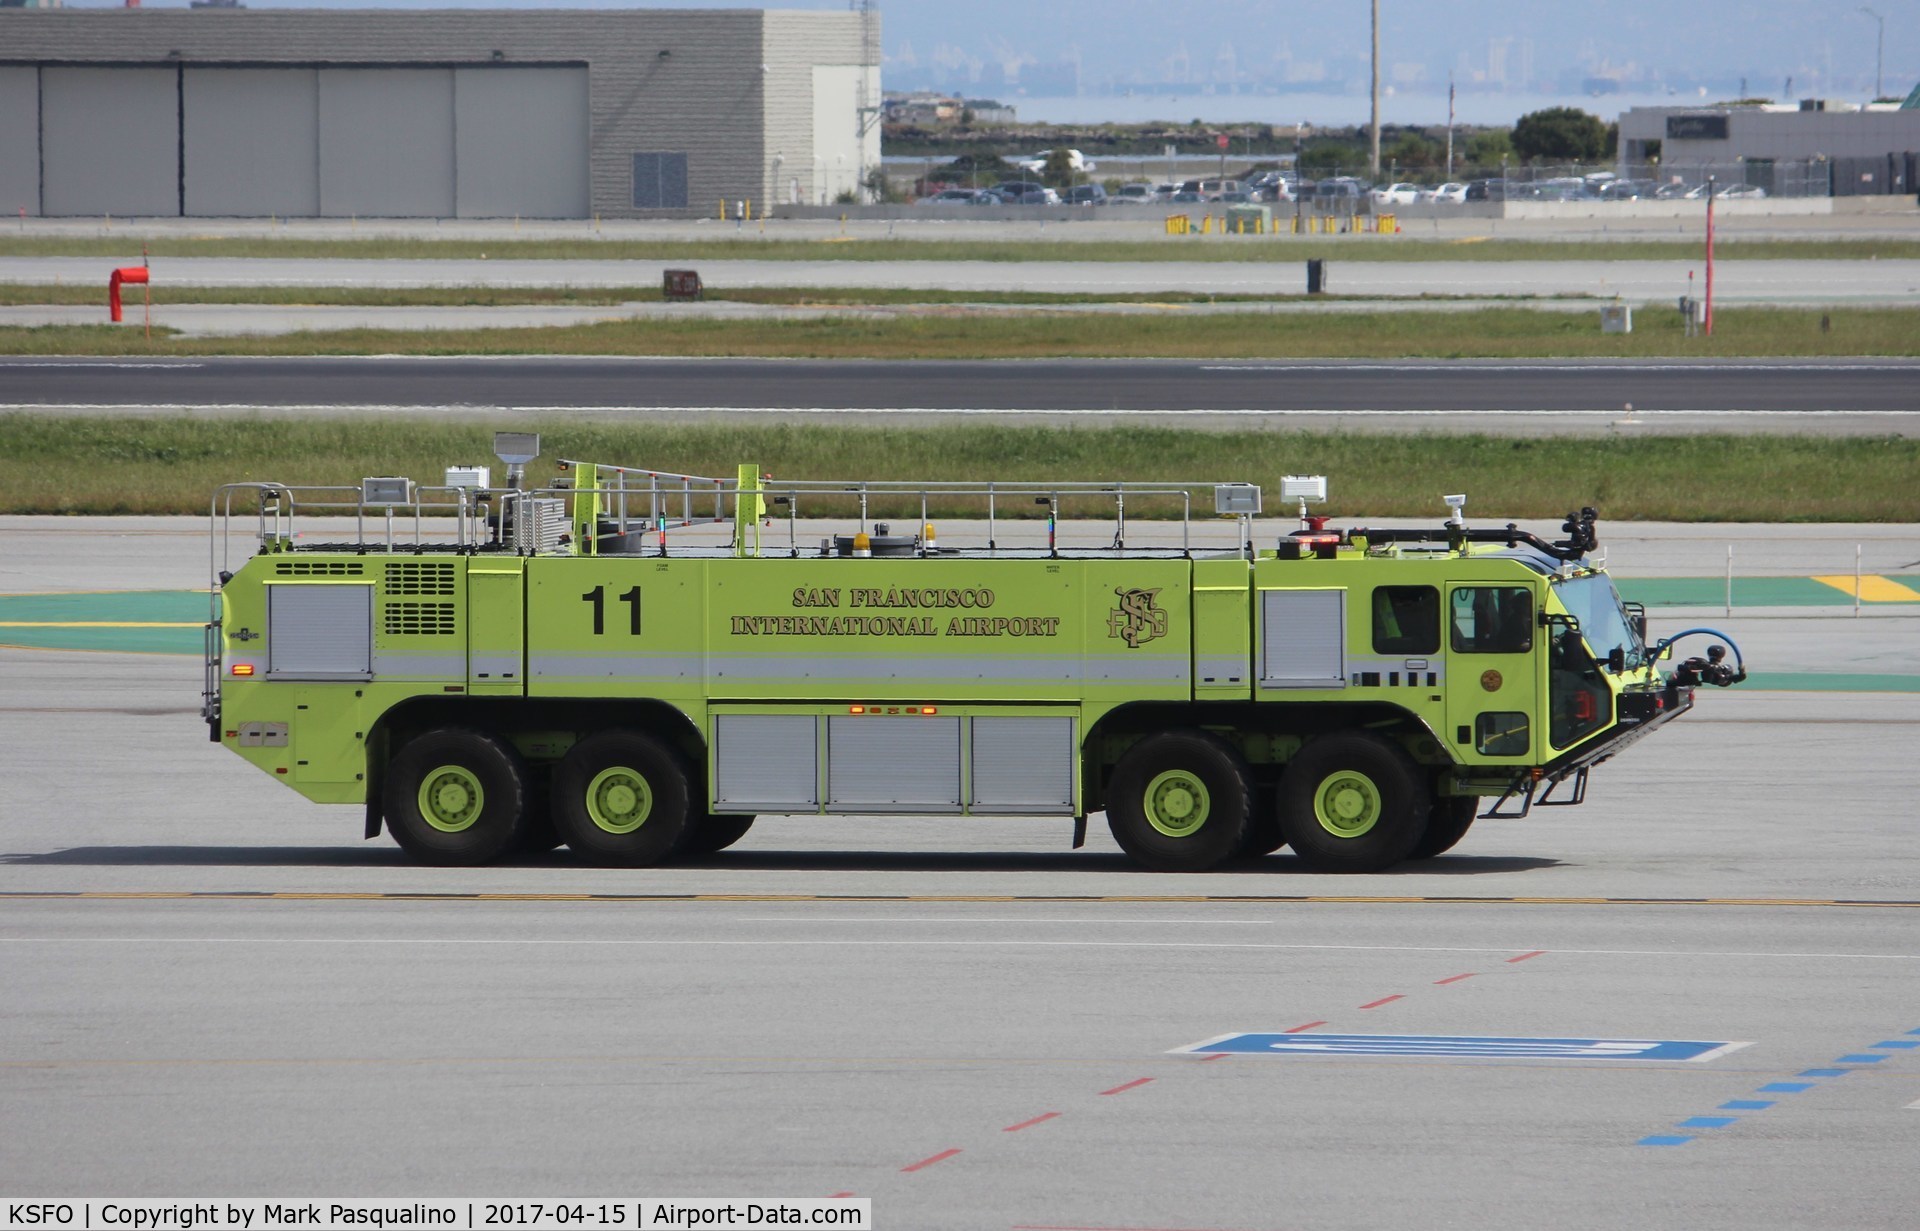 San Francisco International Airport (SFO) - Fire/Crash Rescue 